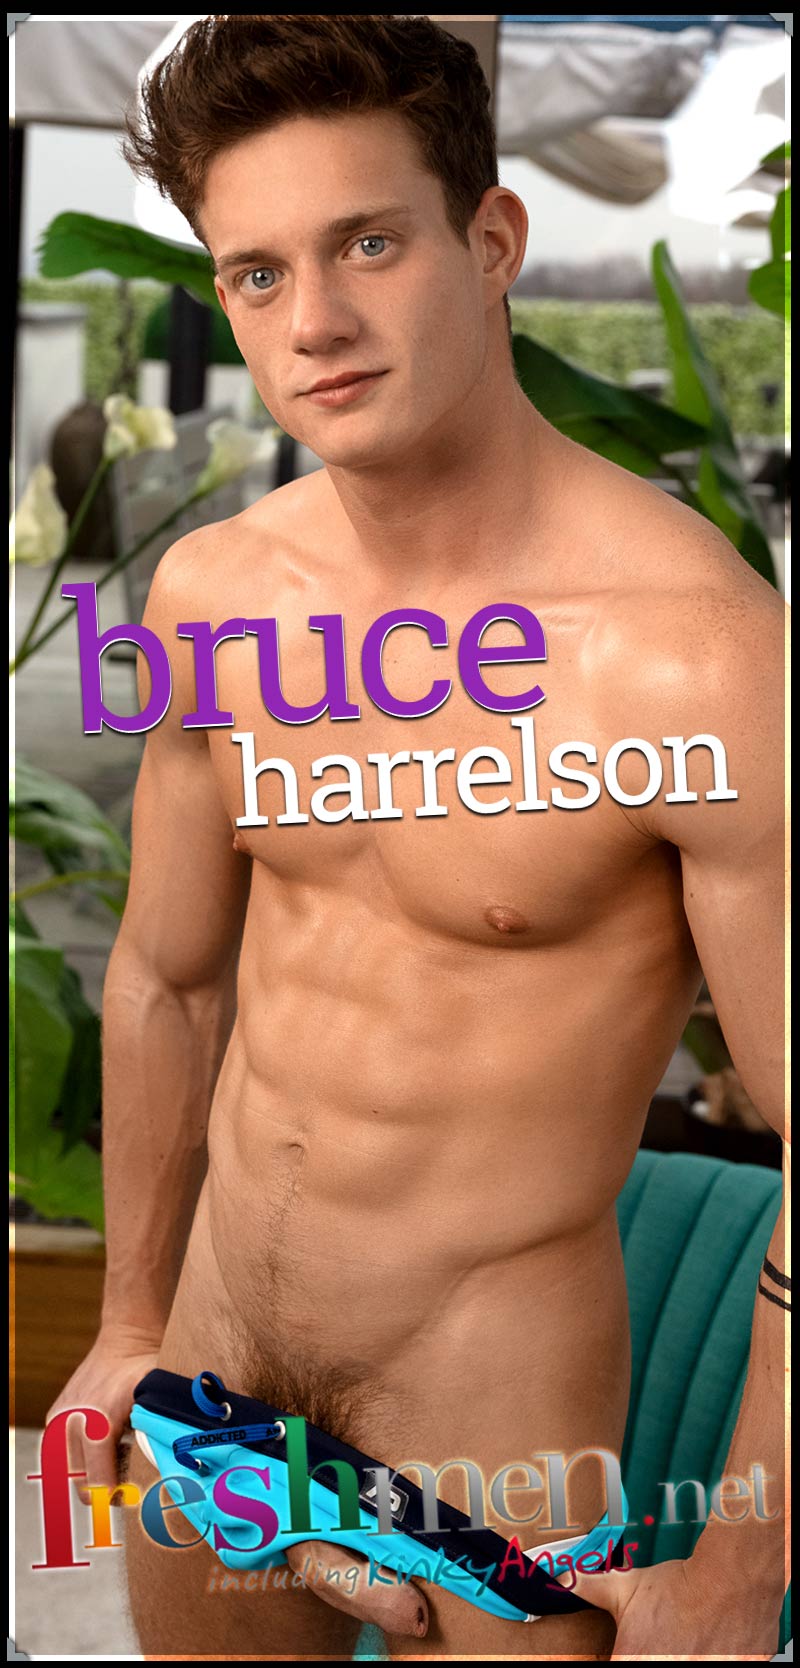 Bruce Harrelson [Photoshoot] at Freshmen.net